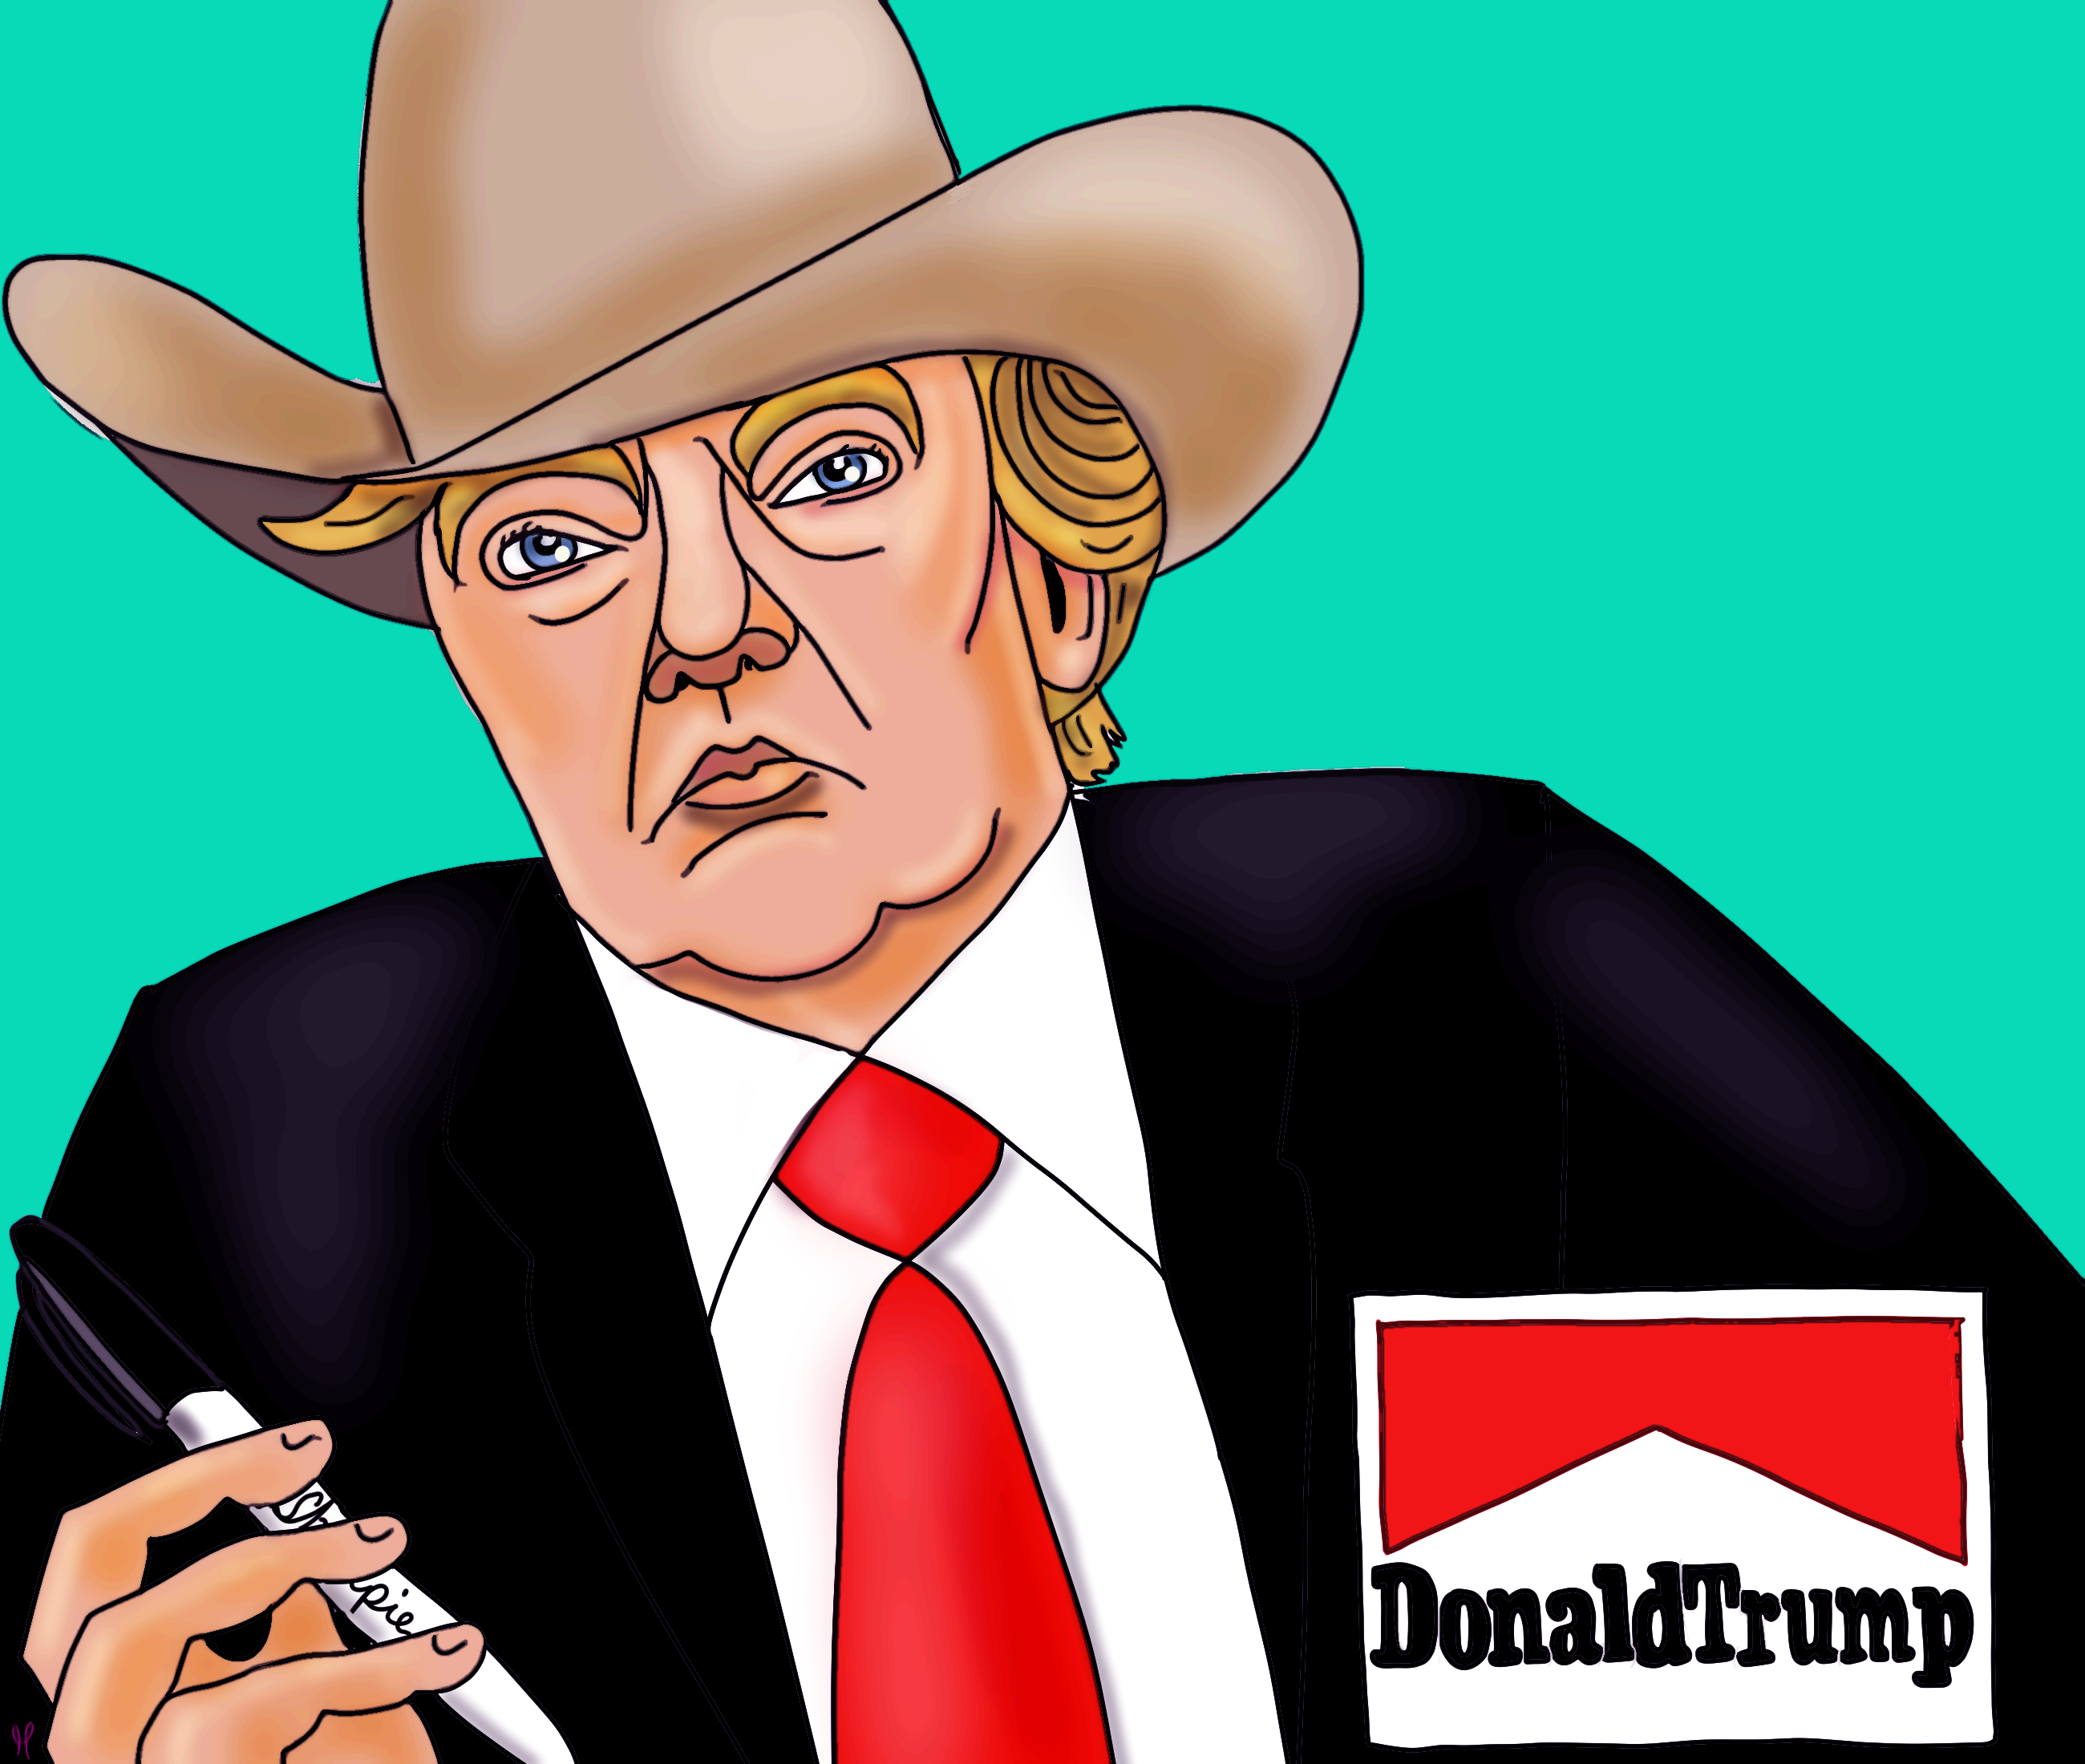 Donald Trump and Nancy Pelosi political cartoons post thumbnail image